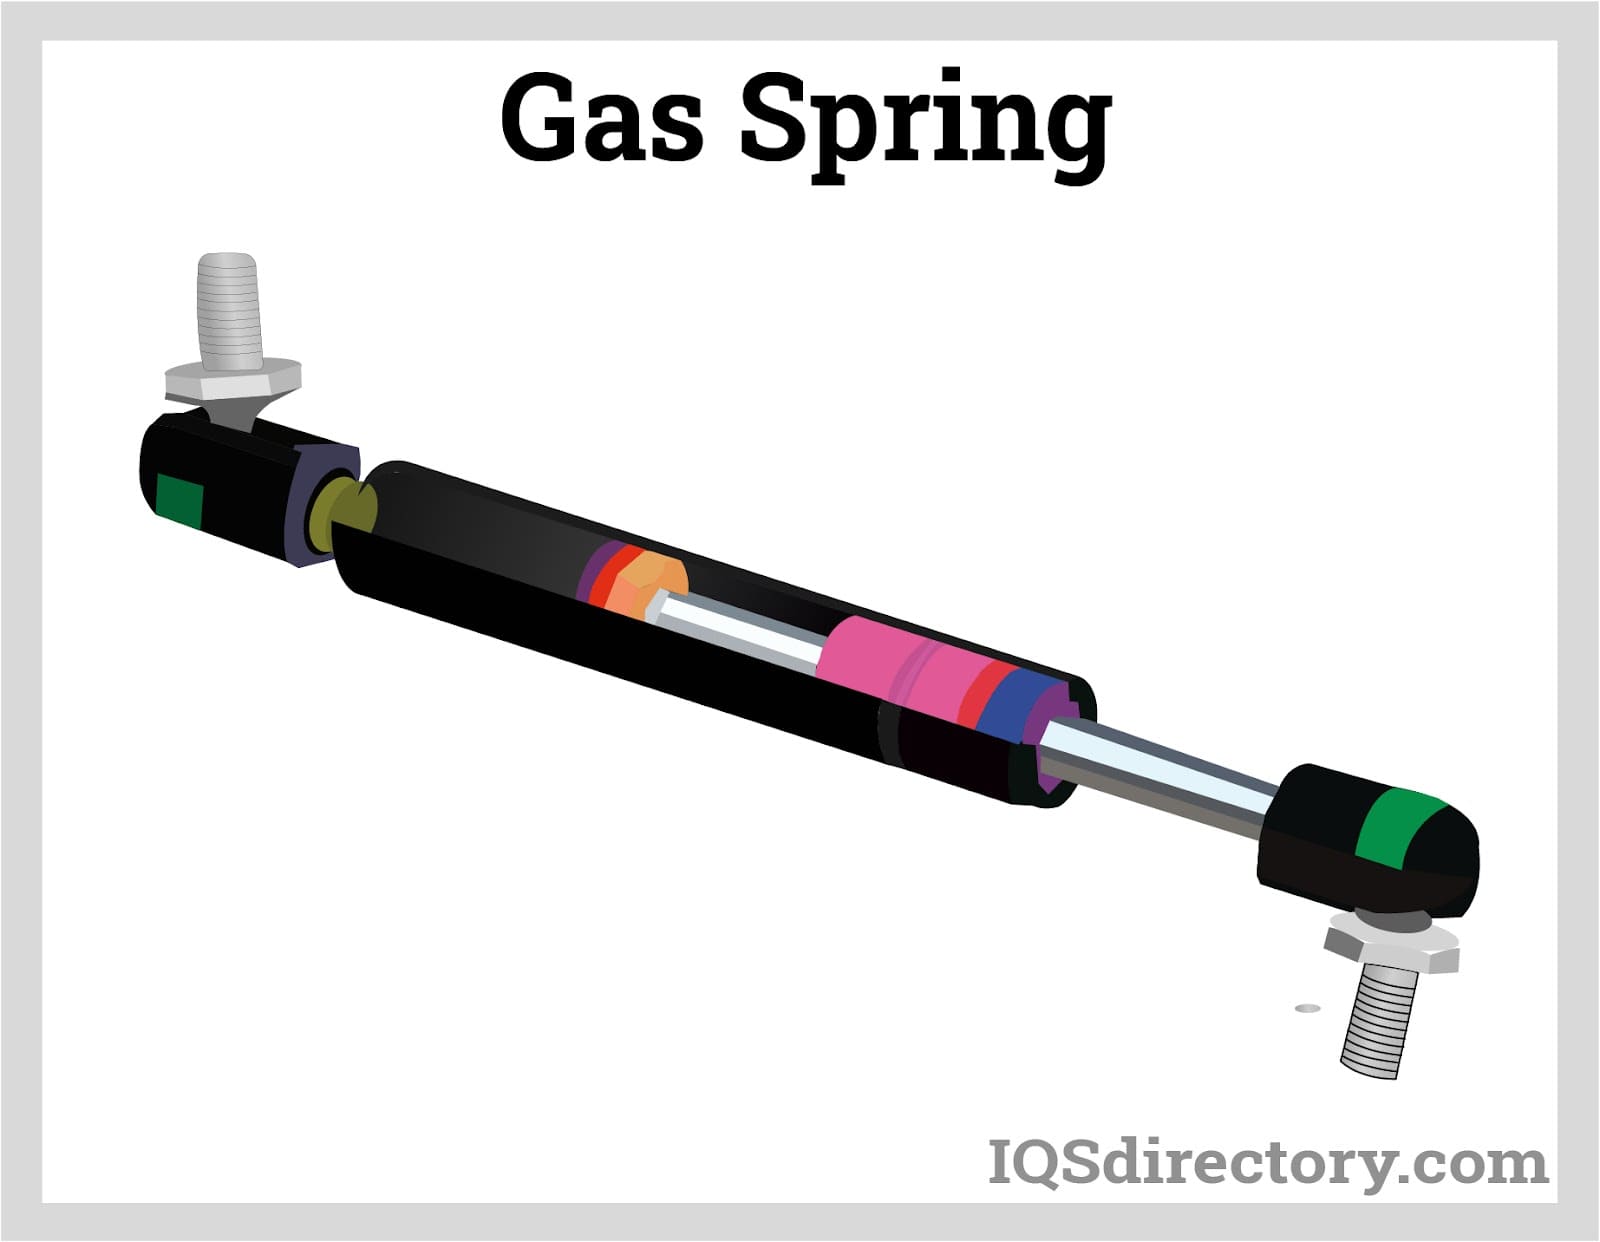 how work gas lift wells